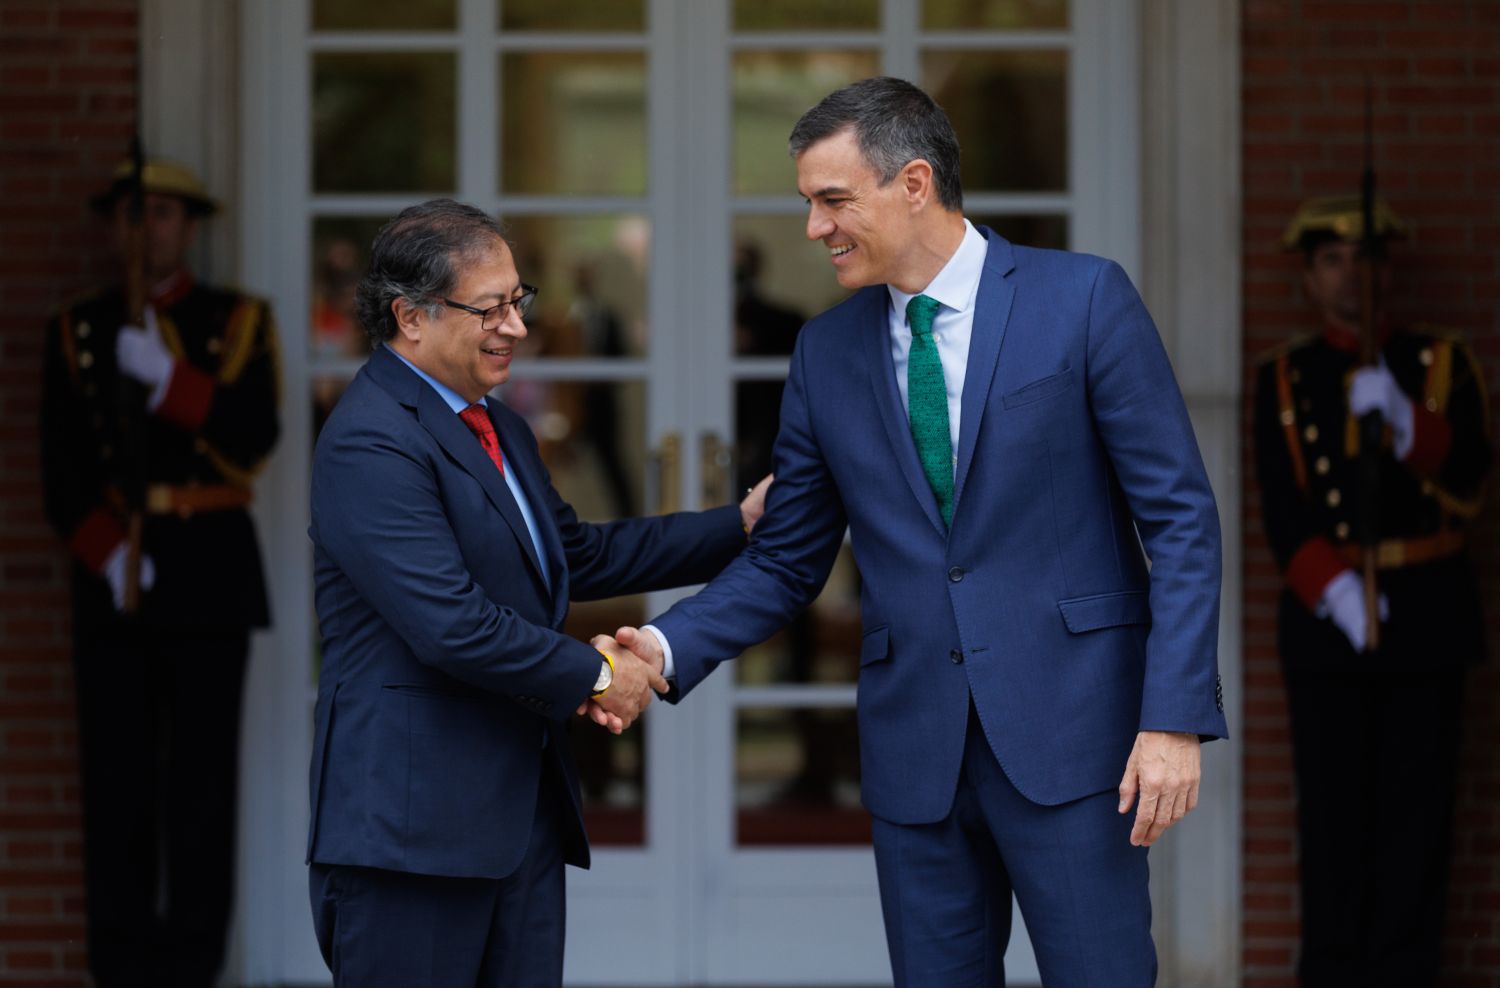 España financiará proyectos en Colombia con 1.000 millones de euros